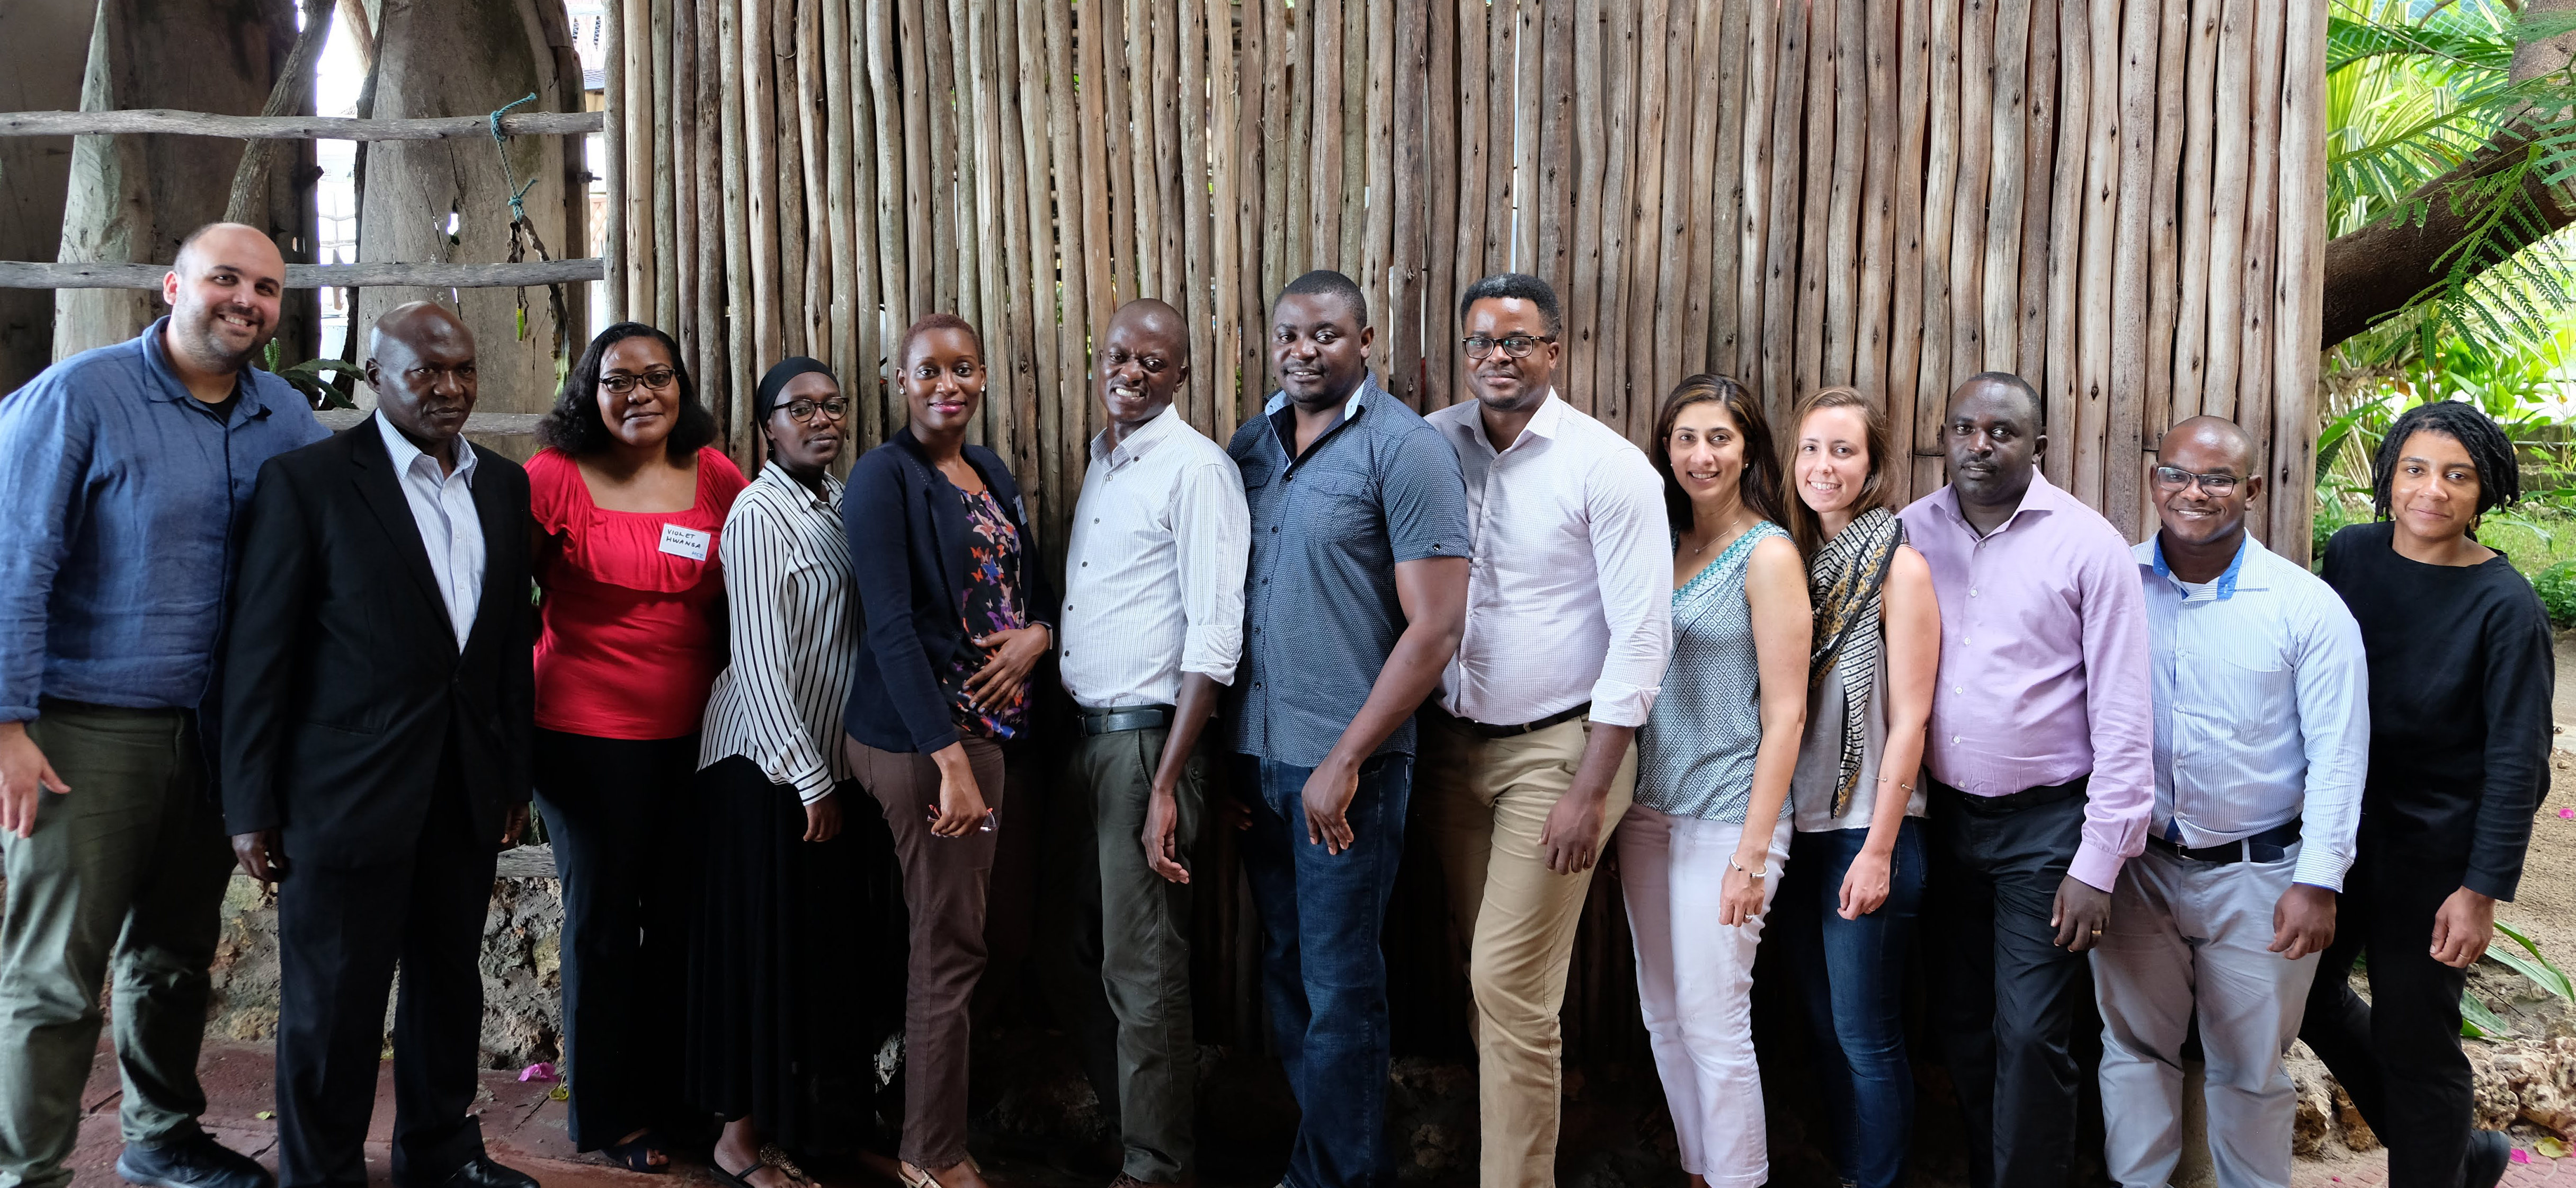 Team members from MCW’s international network meet in Dar es Salaam, Tanzania for the Fifth Africa Programs Seminar in April 2019